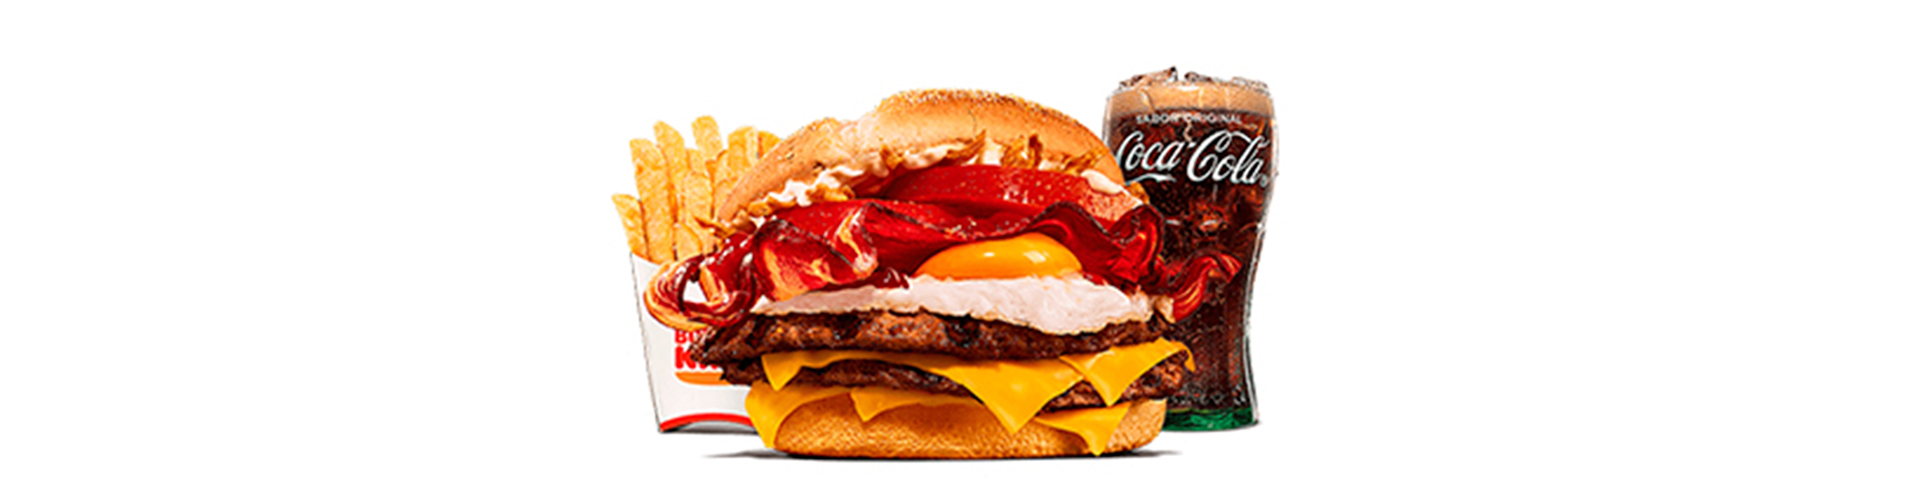 burgerking-40002126-limonada-ensalada